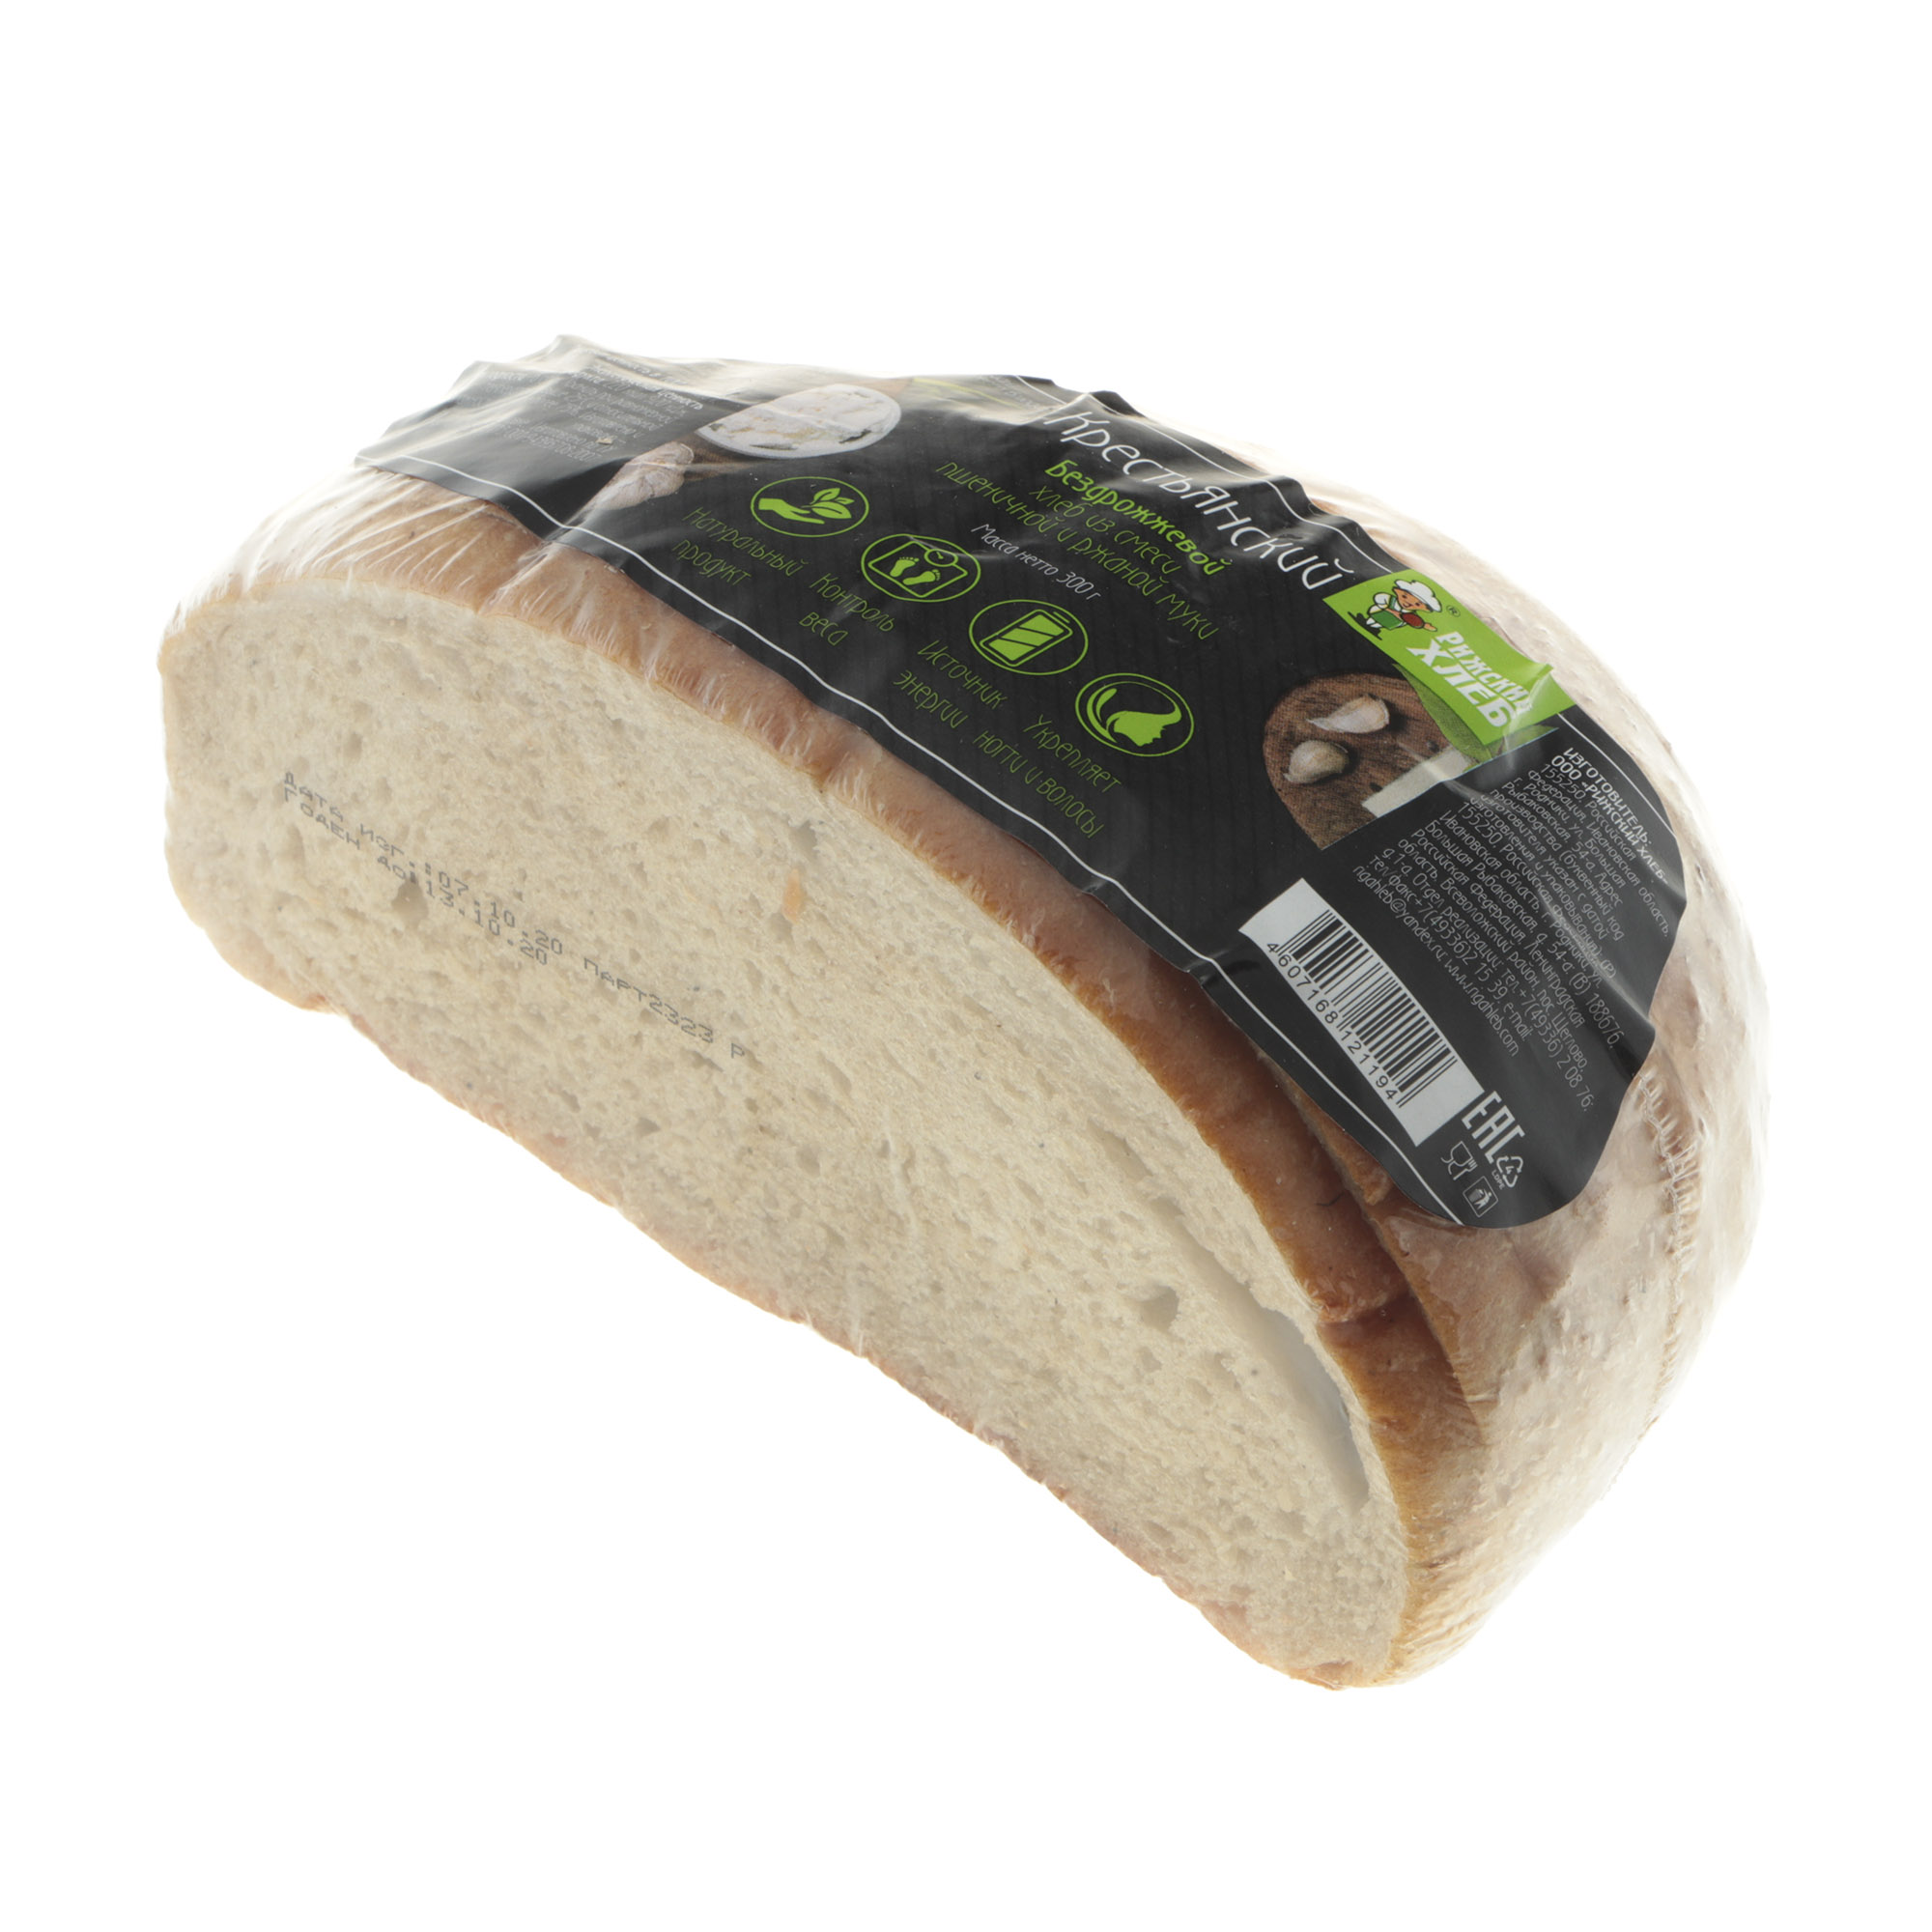 Хлеб Рижский хлеб крестьянский 300 г хлеб рижский хлеб ржаной со злаками бездрожжевой 300 г